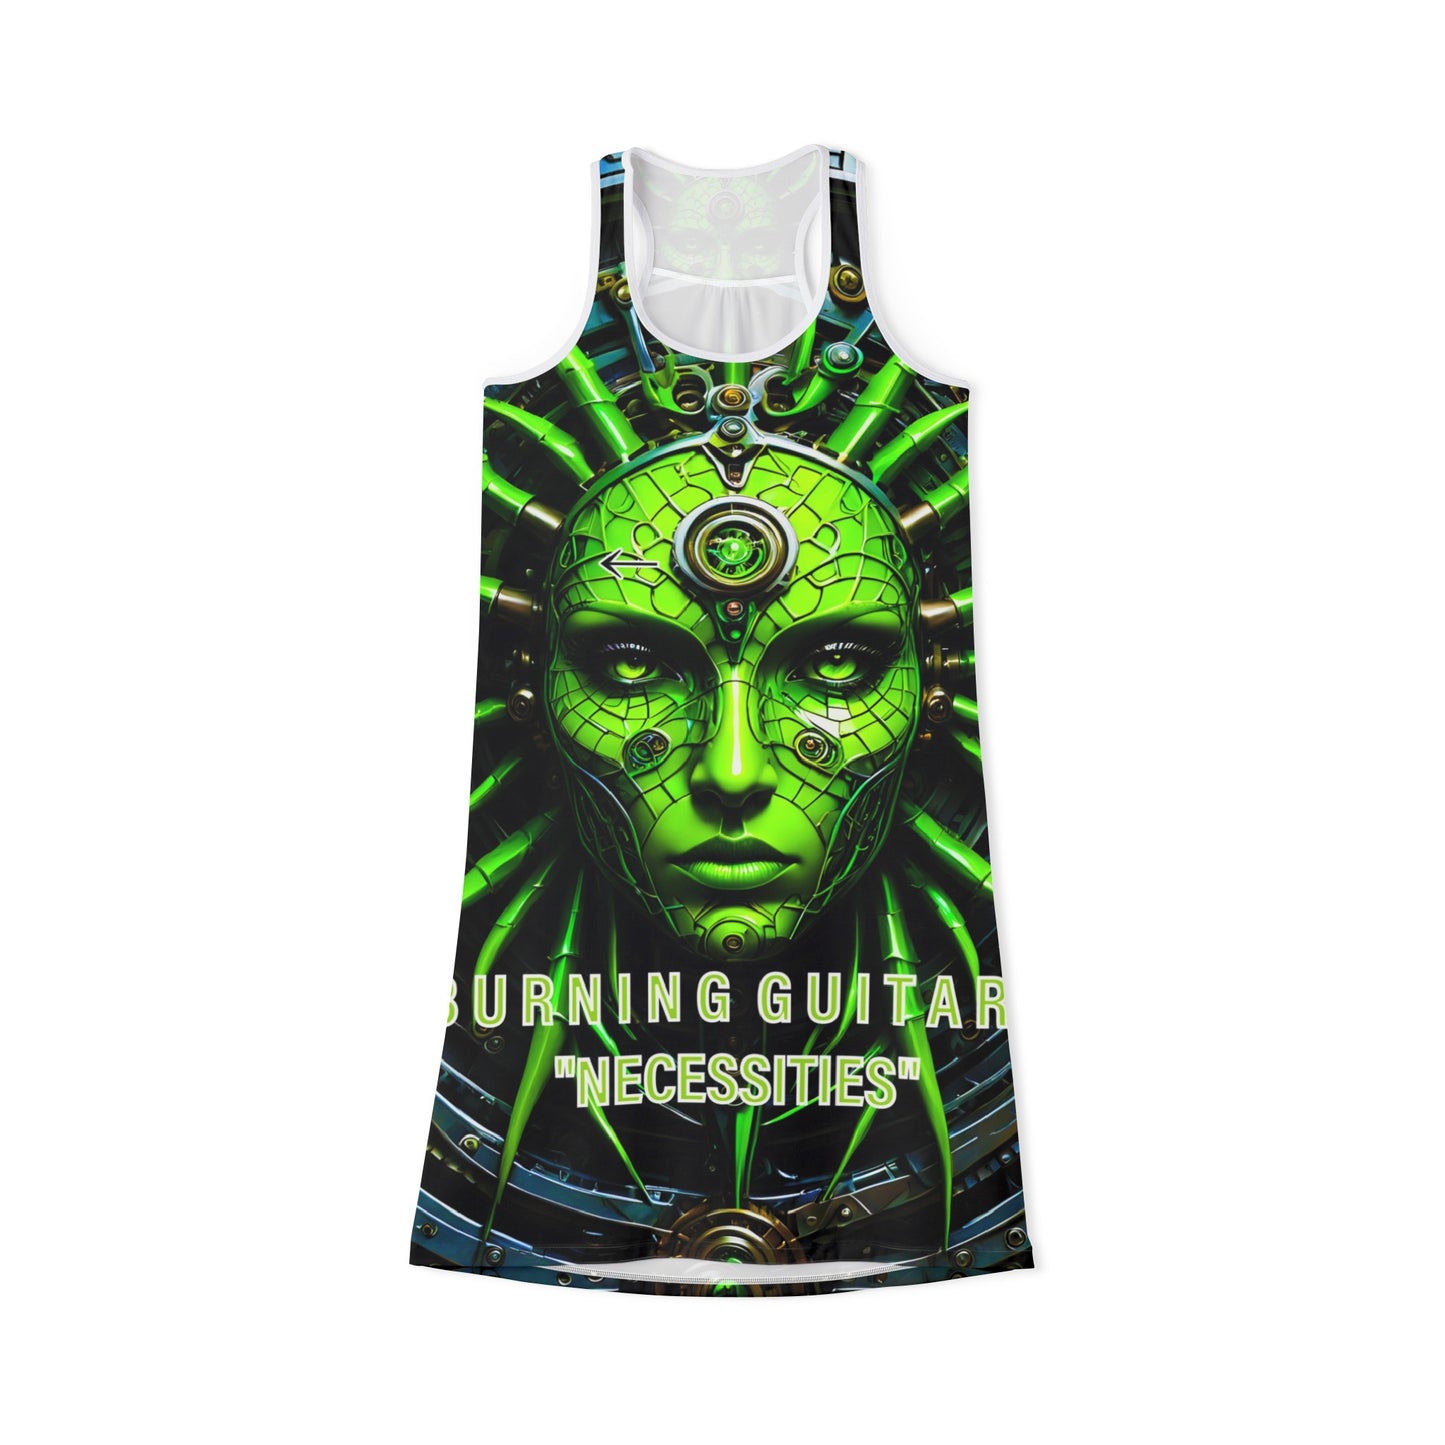 BG Necessities Neon Face Women's Racerback Dress by Burning Guitars